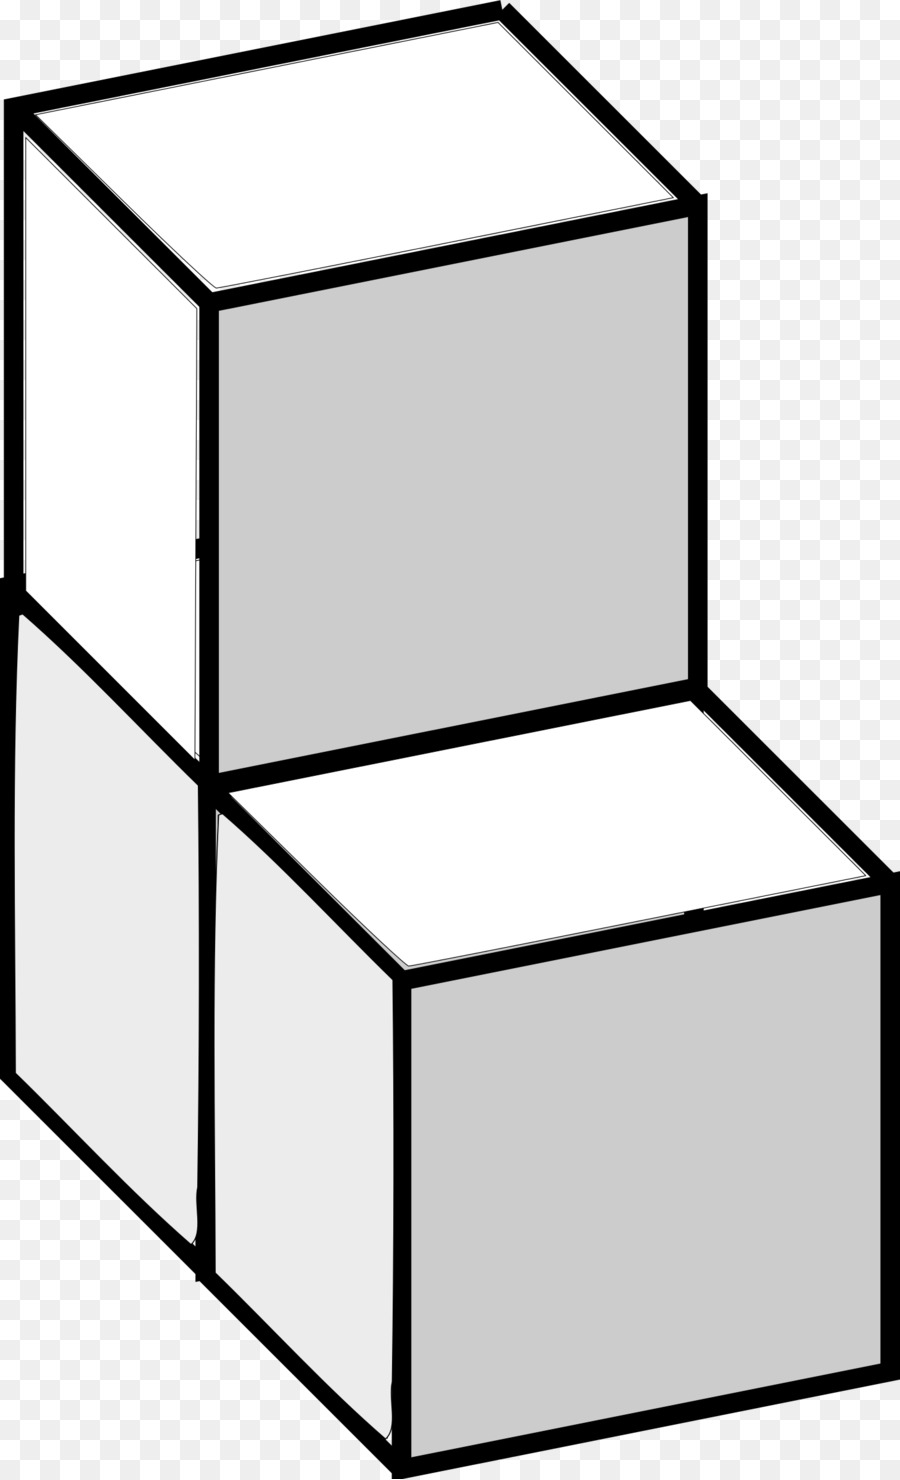 Jigsaw Puzzles Drei-dimensionalen Raum, Soma-Würfel Computer-Icons Clip art - Gummi waren